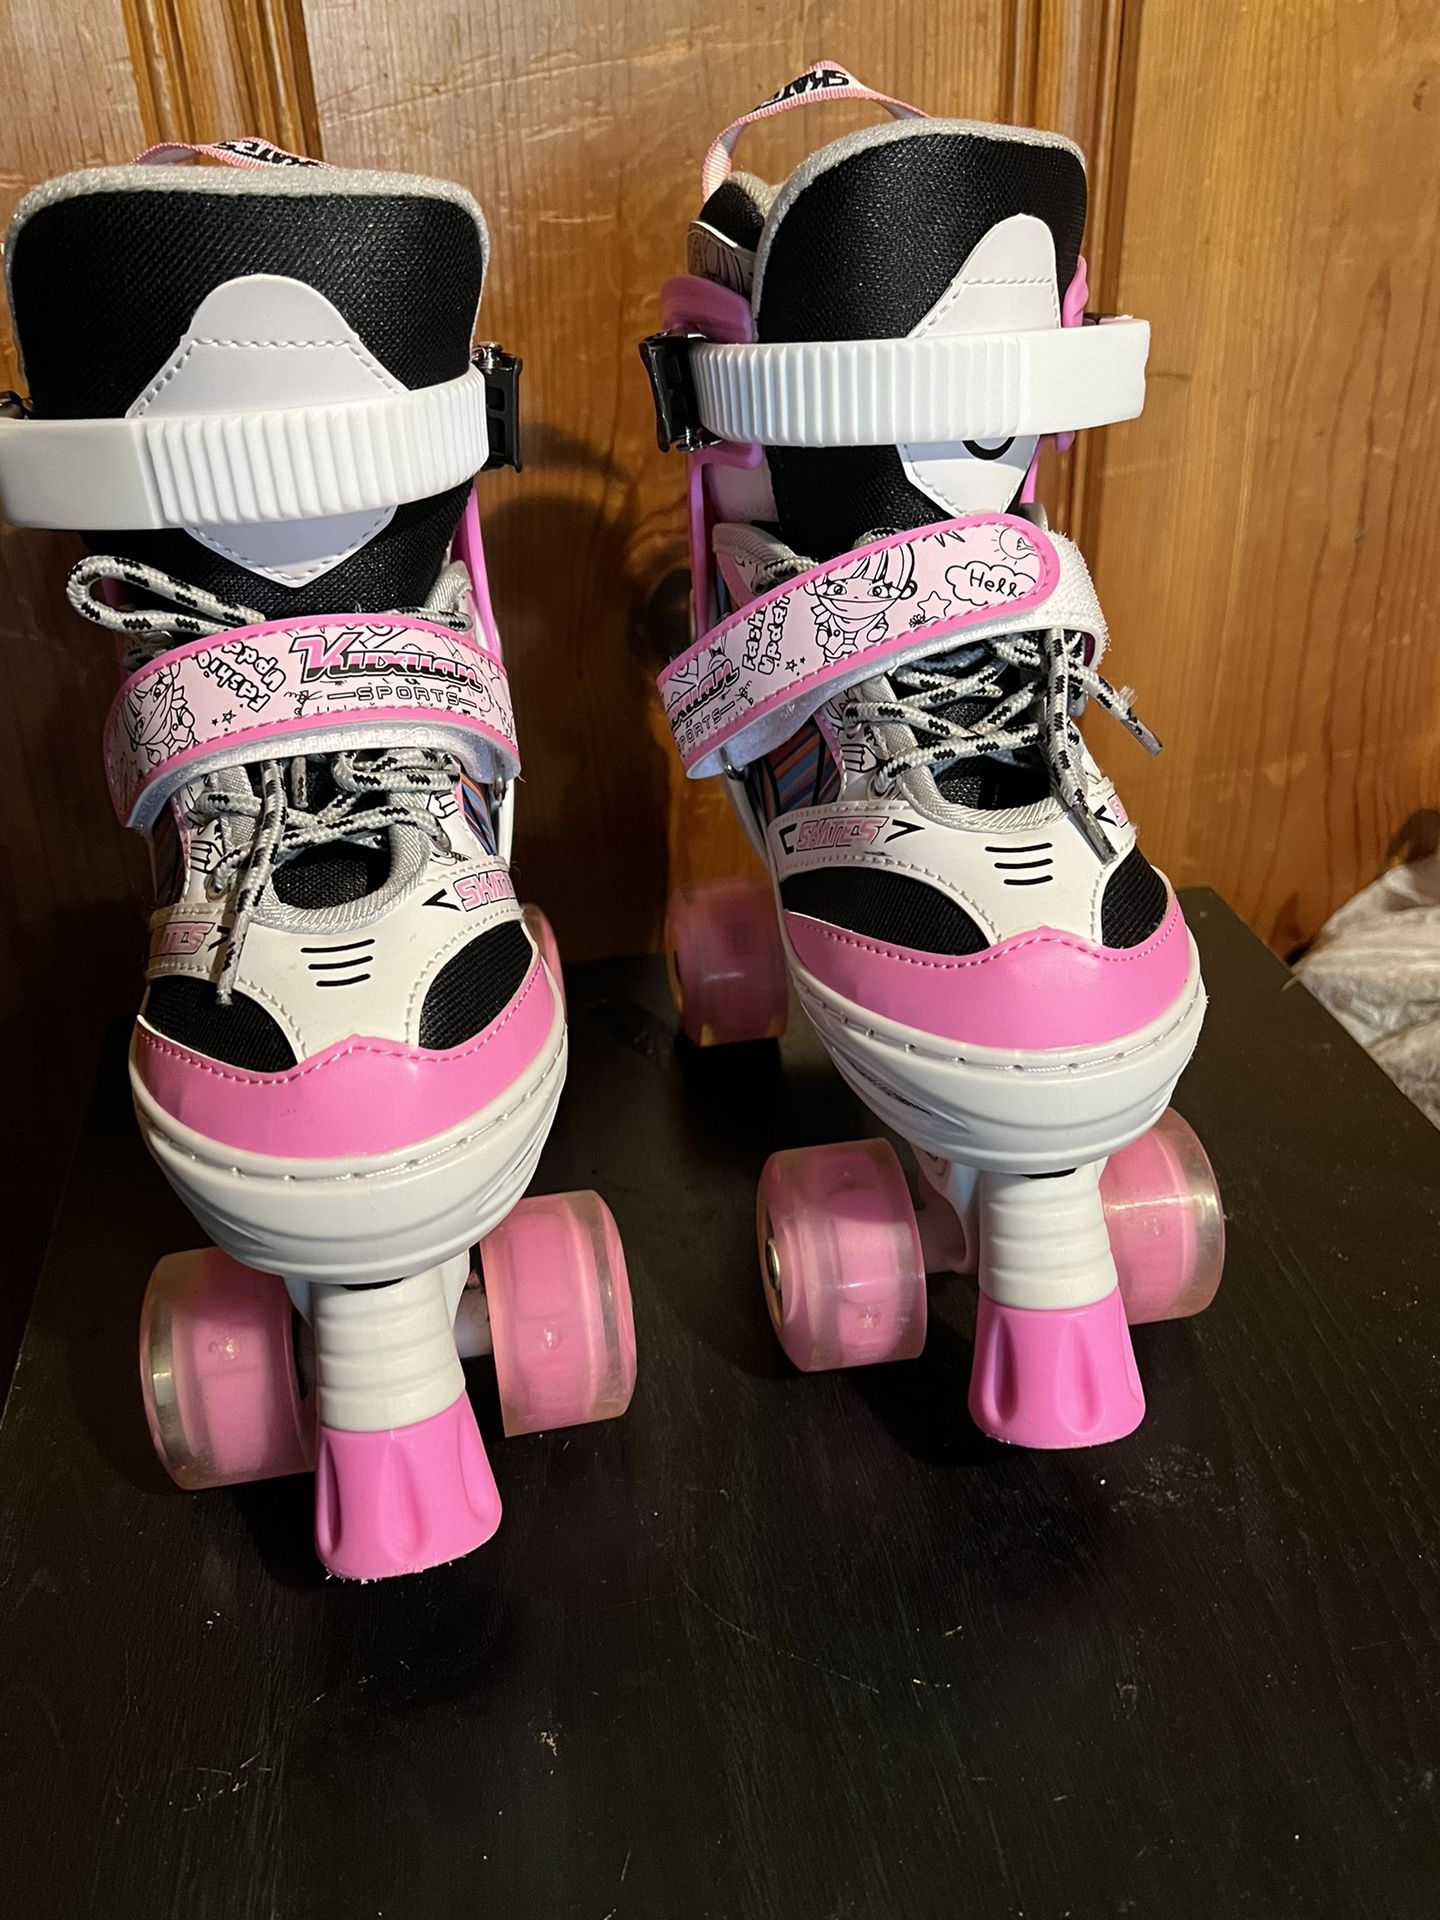 Kuxuan Girls Pink & White Roller Skates Light Up Wheels Medium Adjustable 13C-3Y